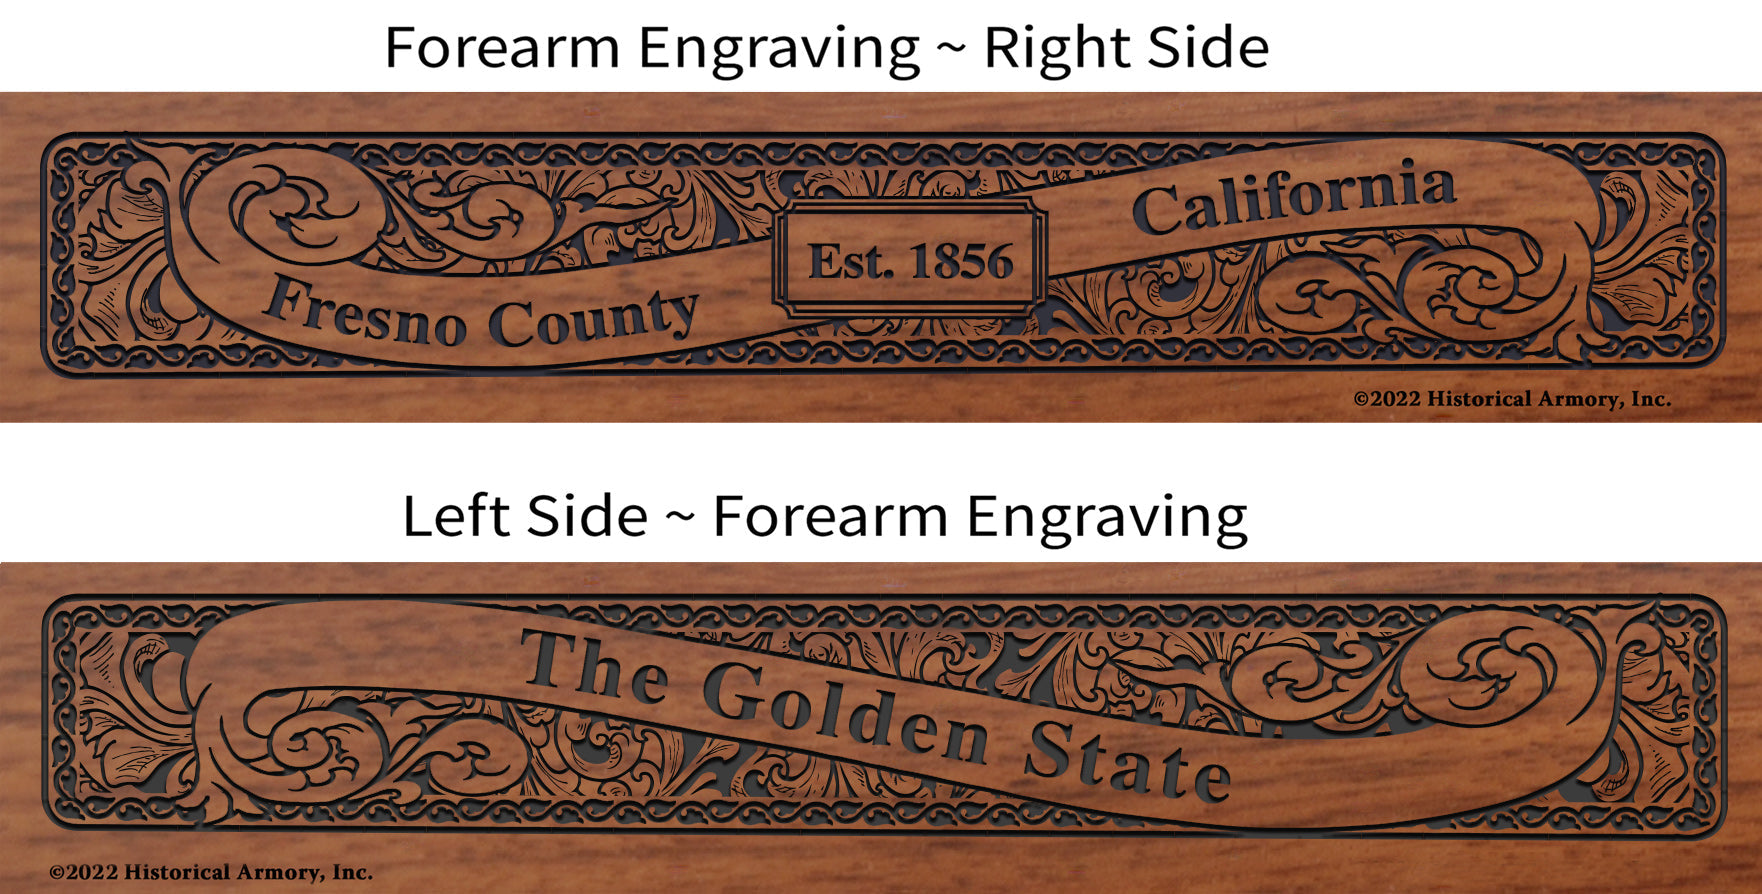 Fresno County California Engraved Rifle Forearm